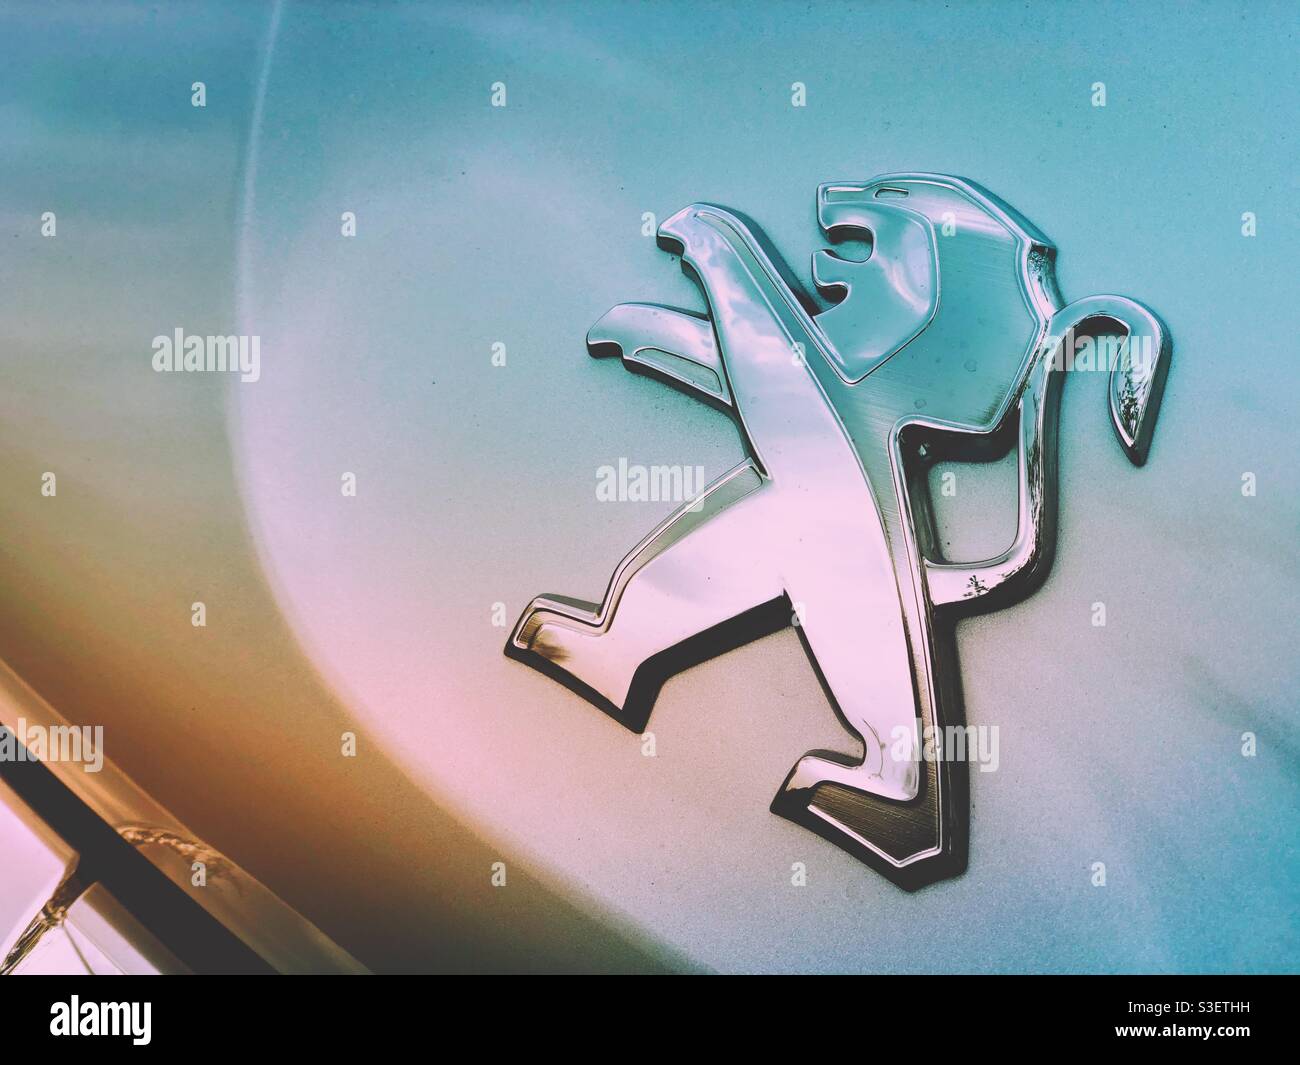 Peugeot, logo, car Stock Photo - Alamy